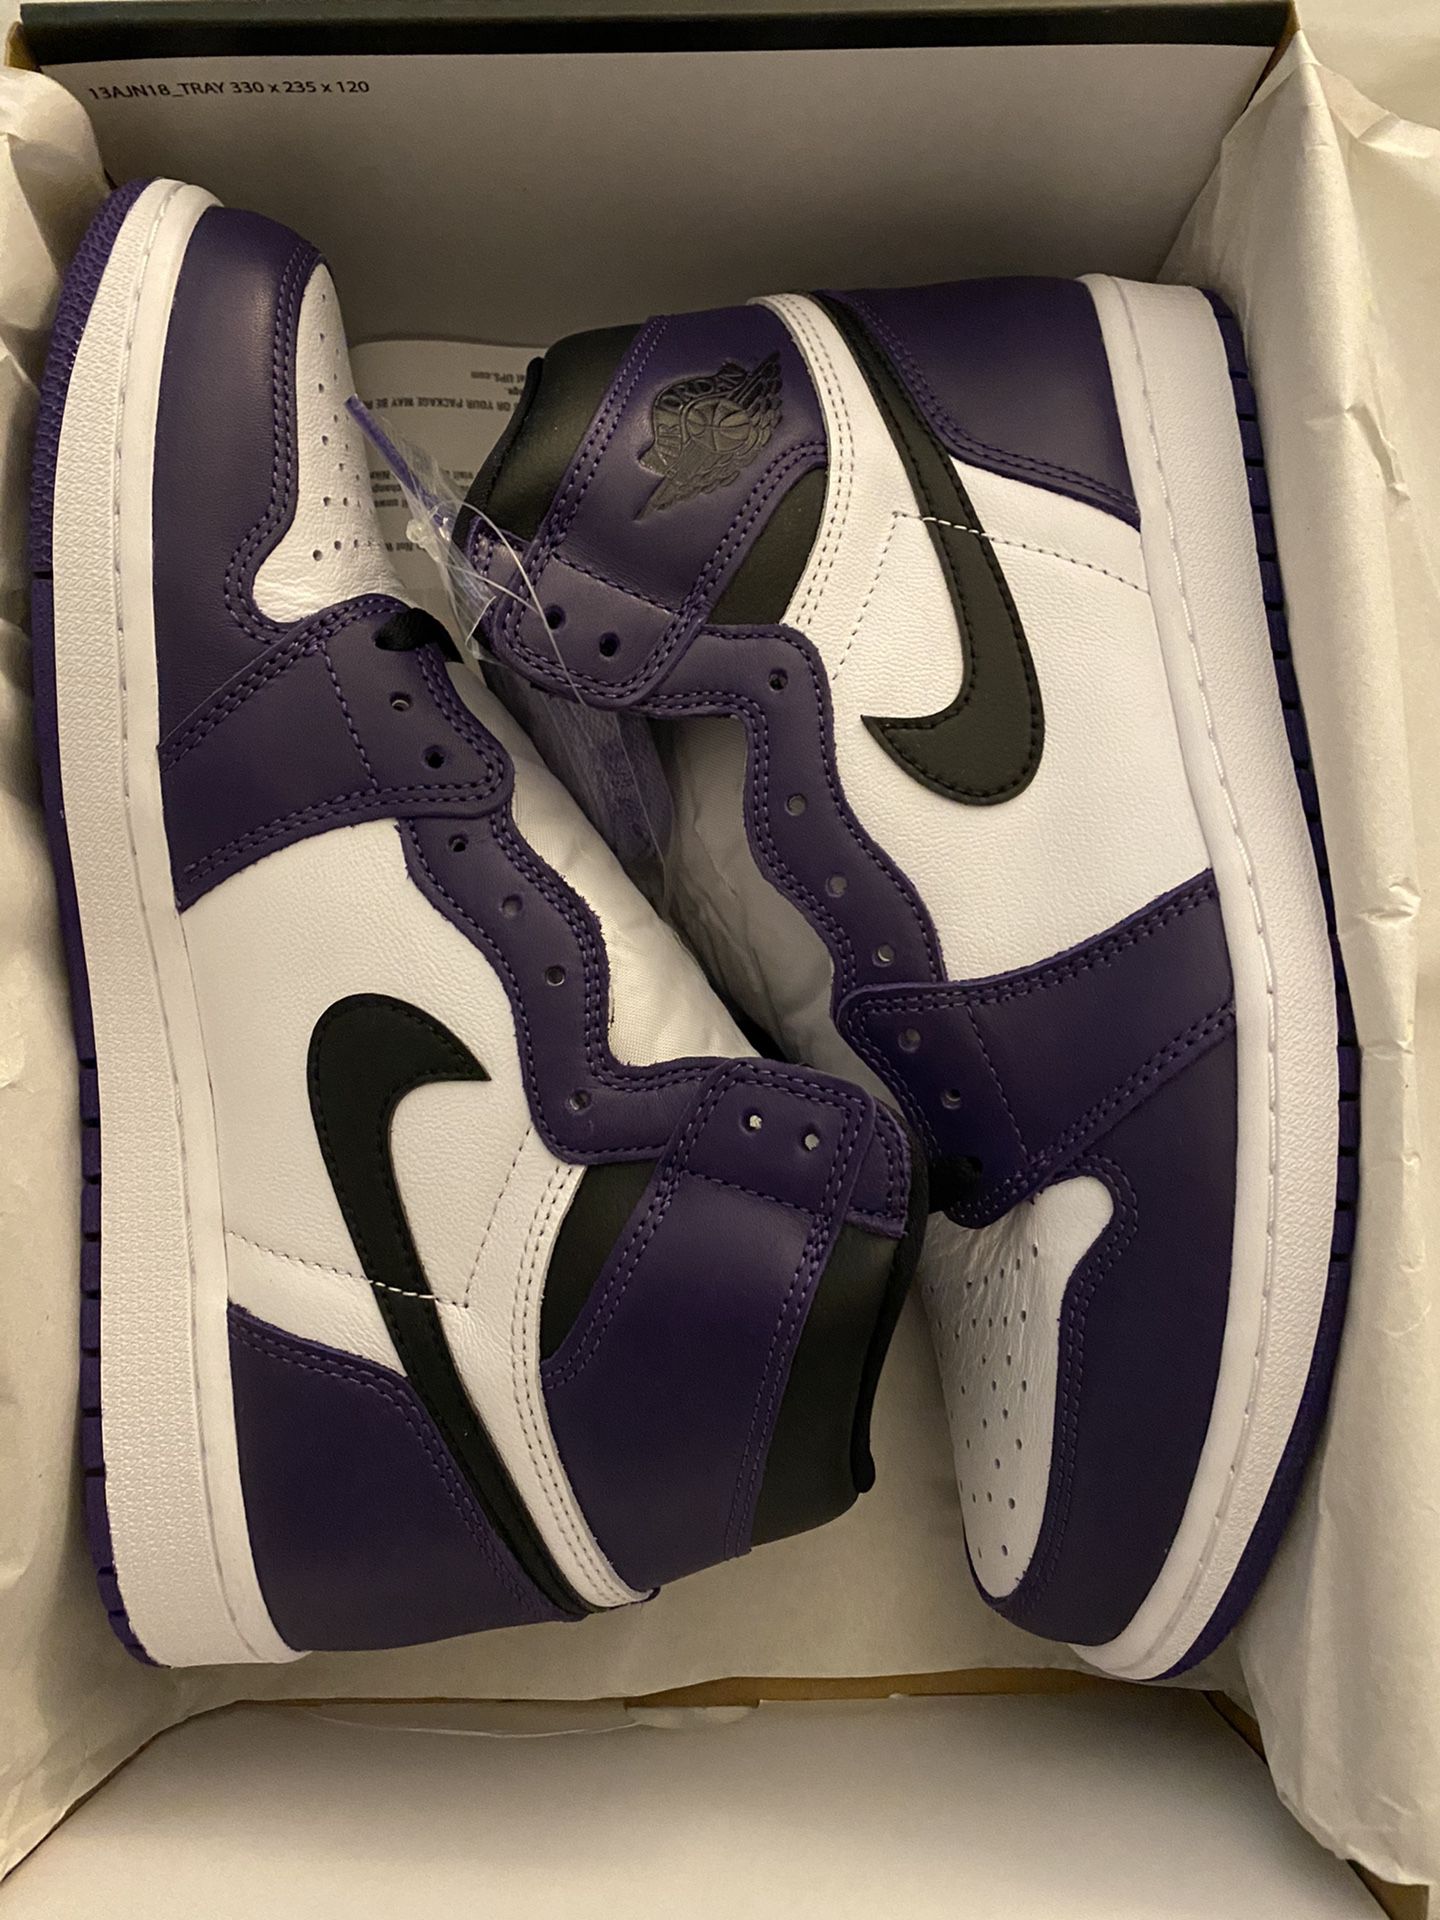 Jordan Court purple 1